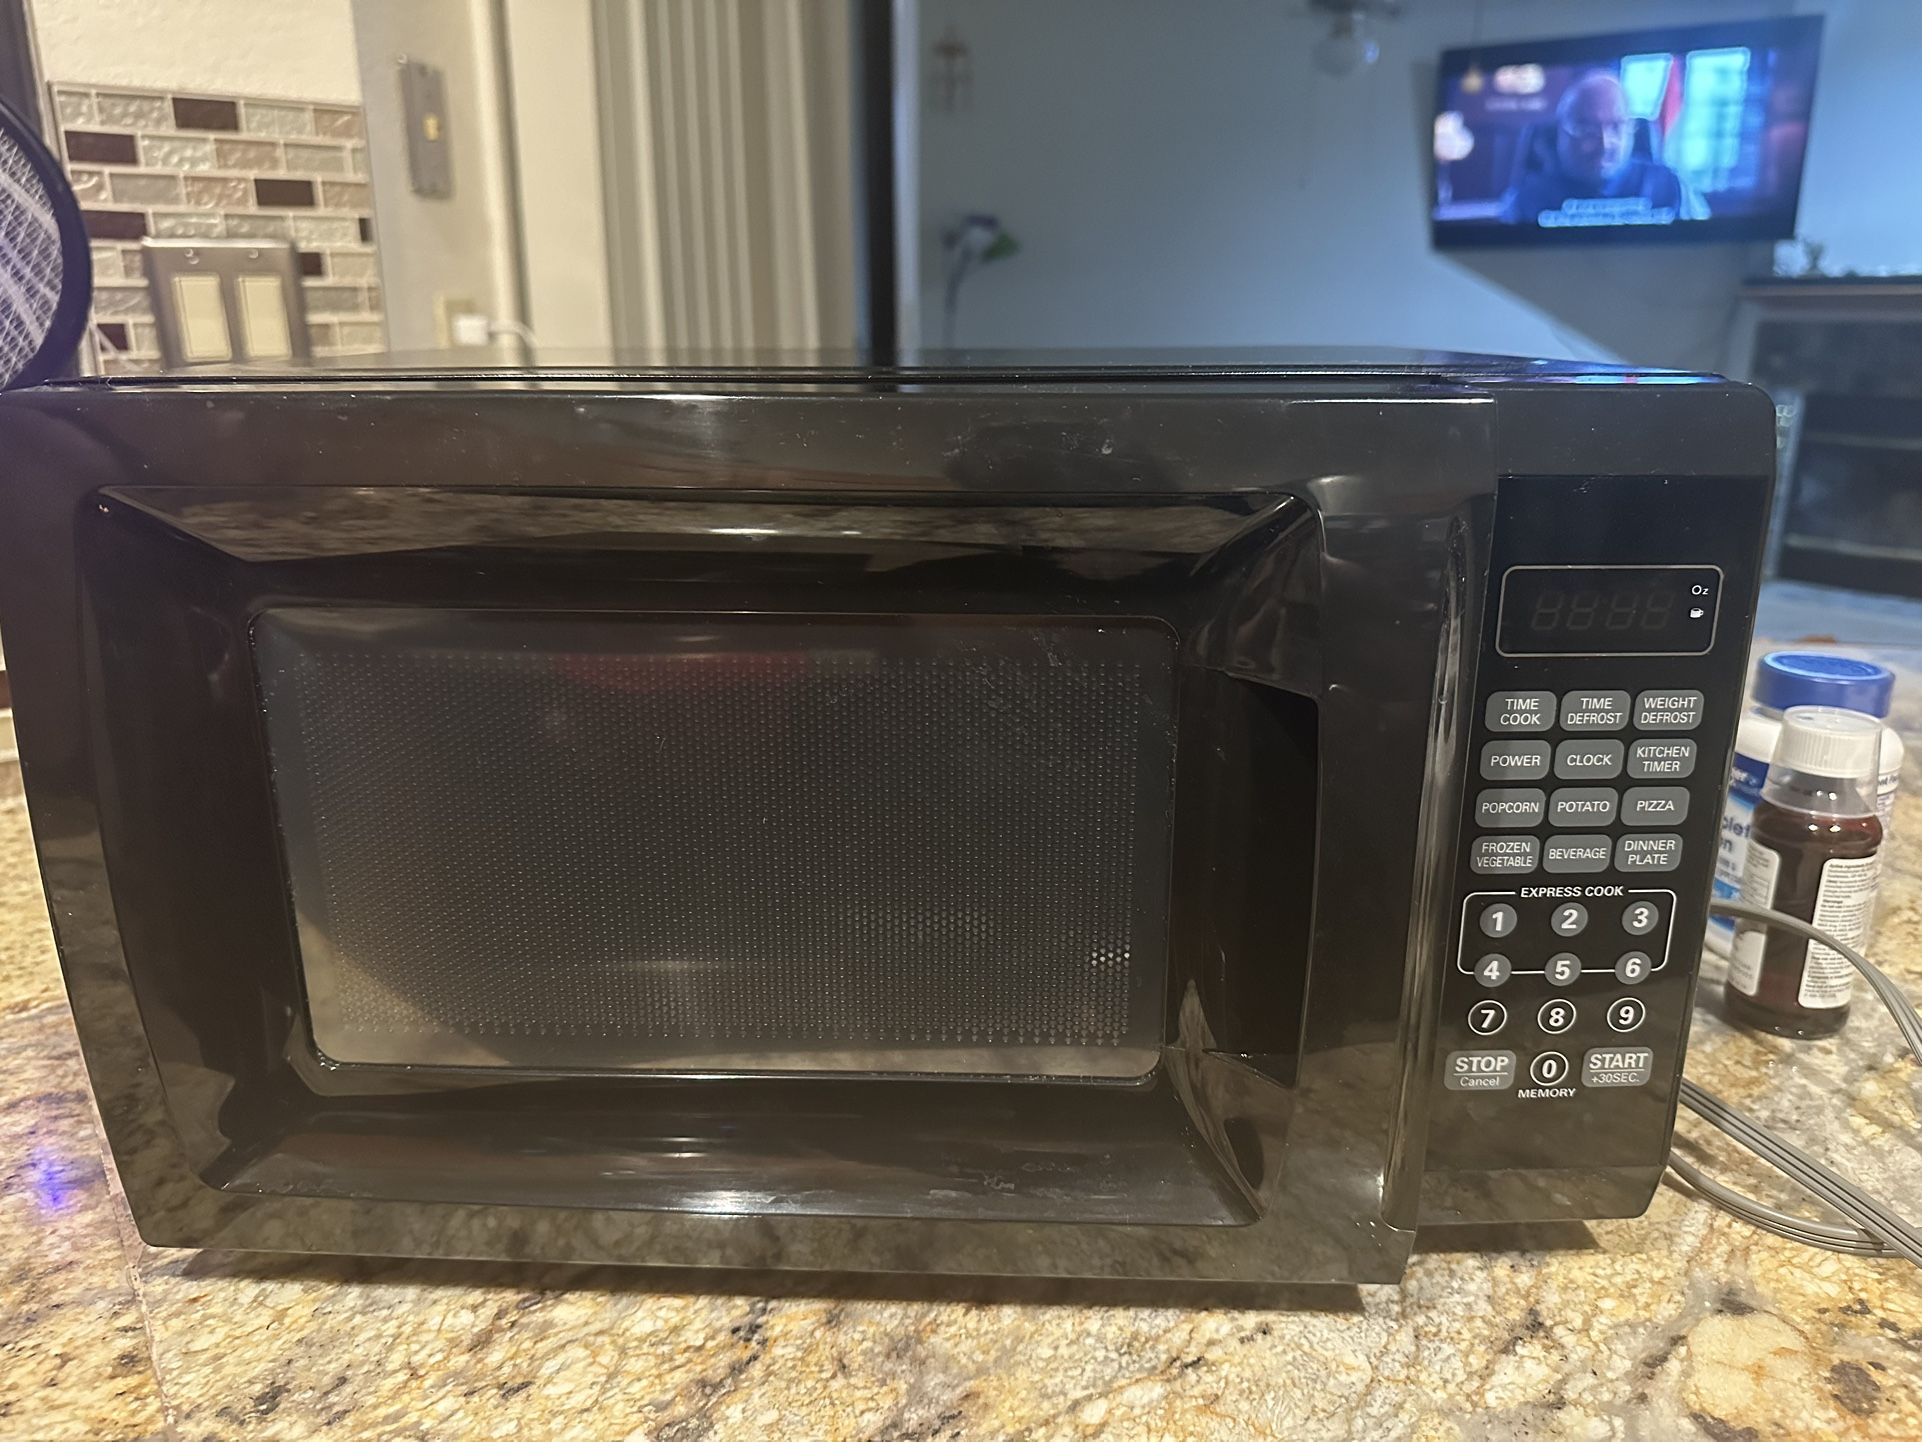 Mainstay Microwave